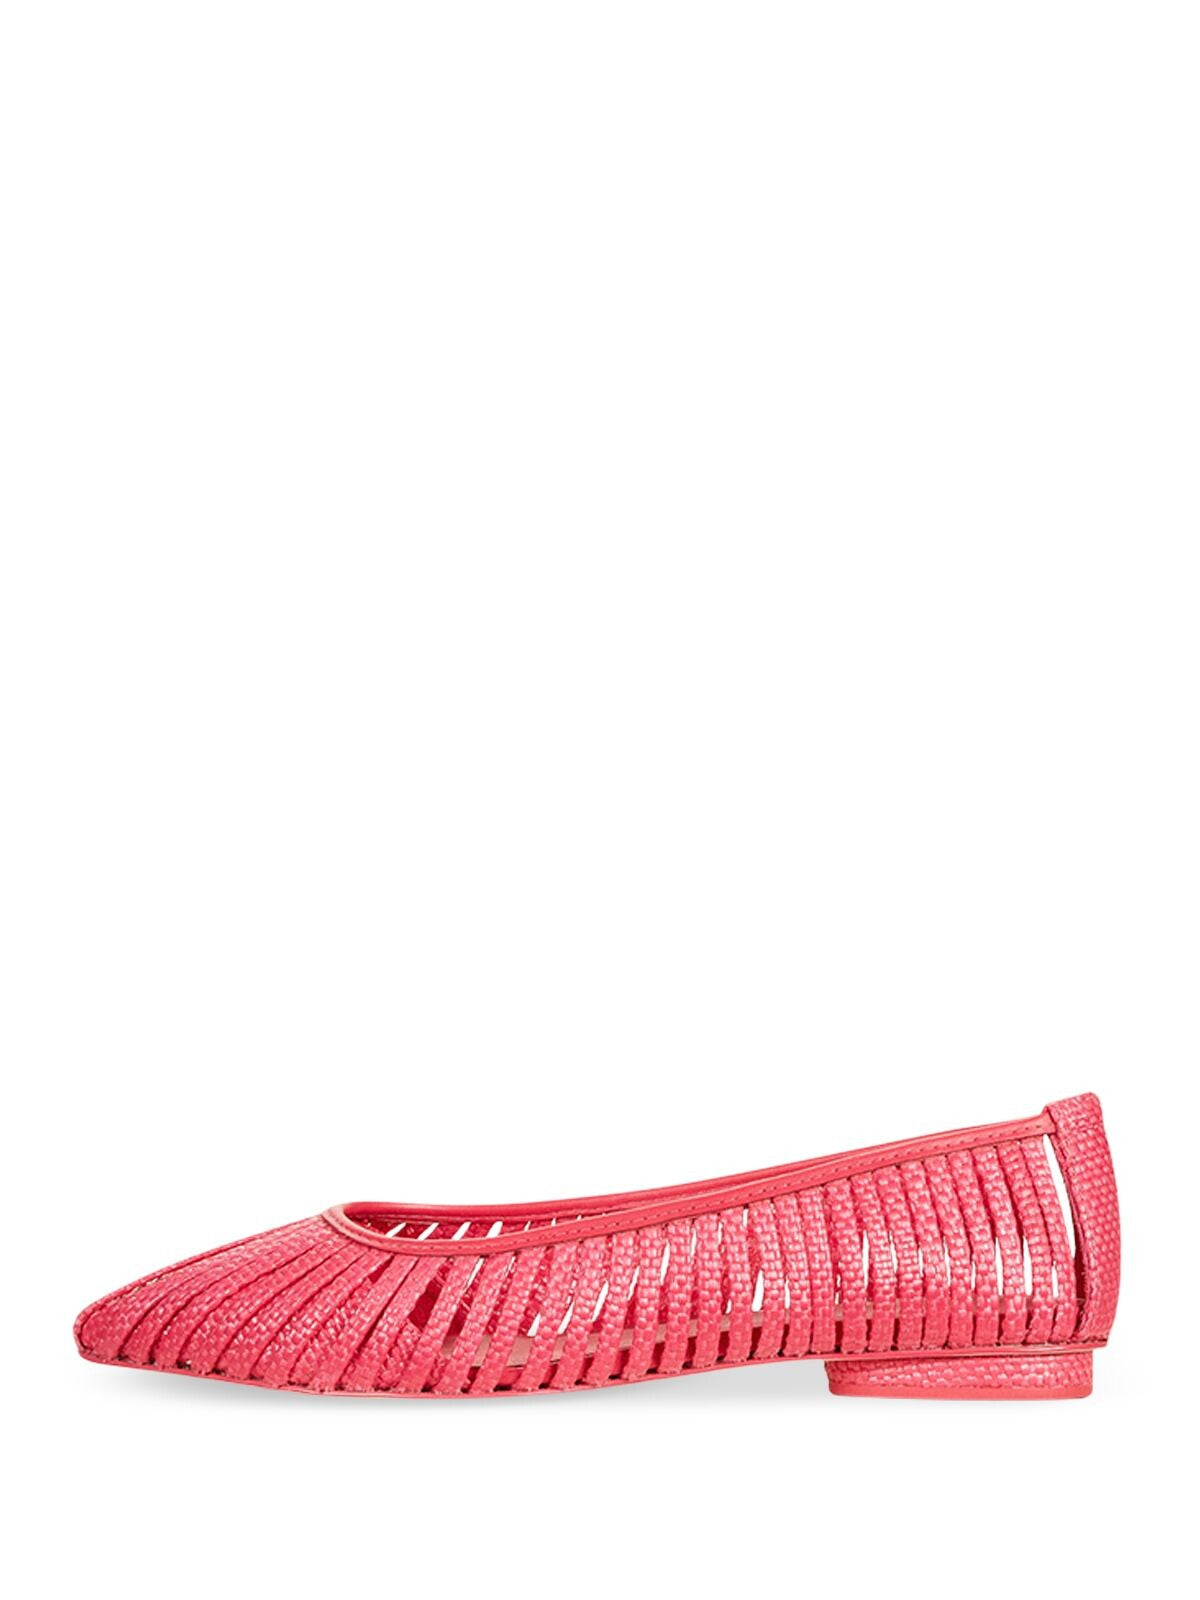 CULT GAIA Womens Camellia Pink Raffia Padded Leena Pointed Toe Slip On Flats Shoes 40